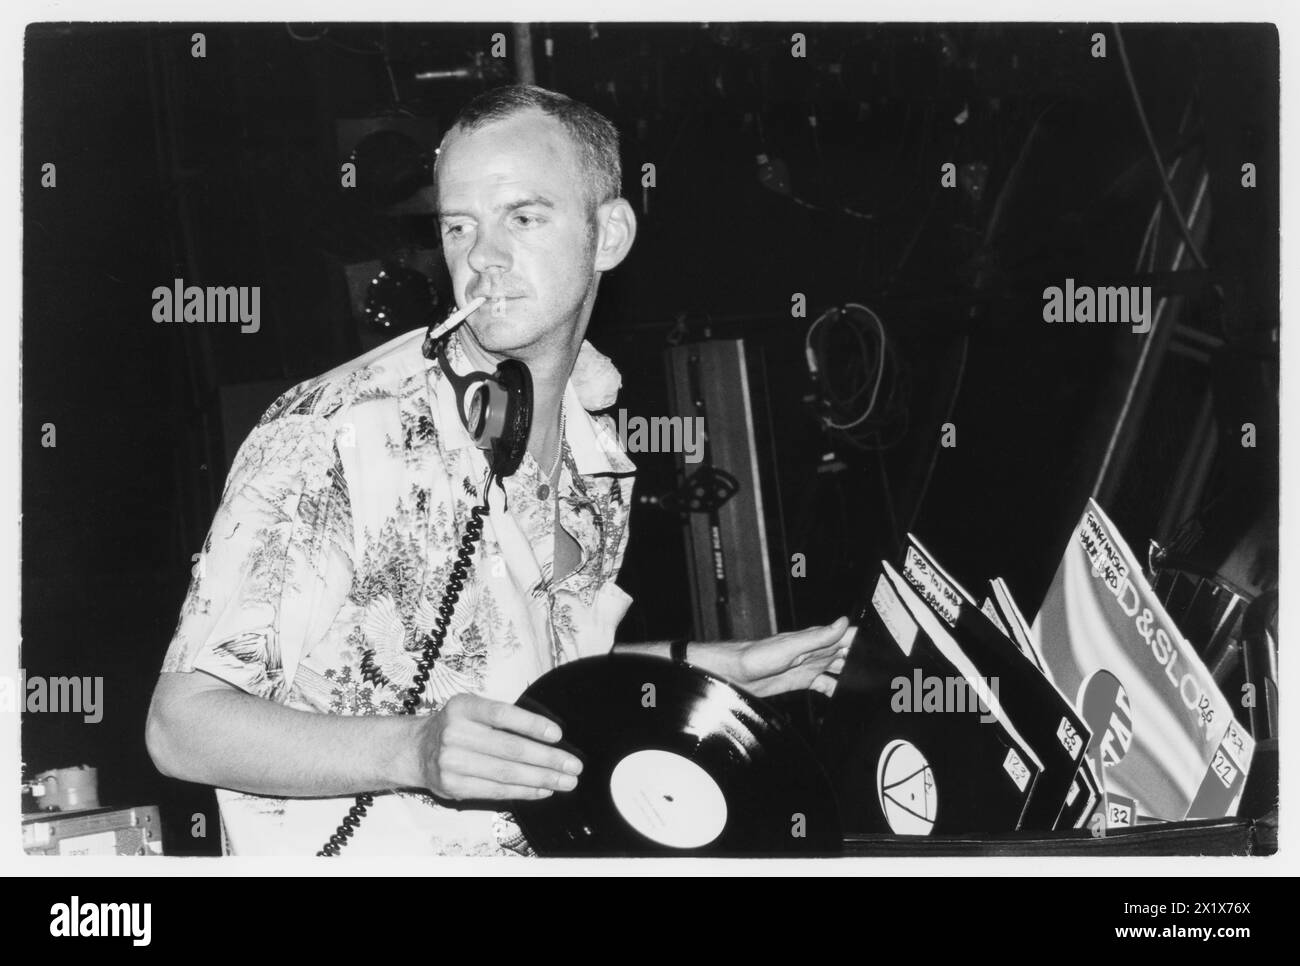 SUPERSTAR DJ, FATBOY SLIM, HOMELANDS FESTIVAL, 1999: Legendärer DJ Fatboy Slim – echter Name Norman Cook – spielt live beim Homelands Festival 1999, während er am 29. Mai 1999 eine Zigarette raucht. Foto: Rob Watkins. Stockfoto